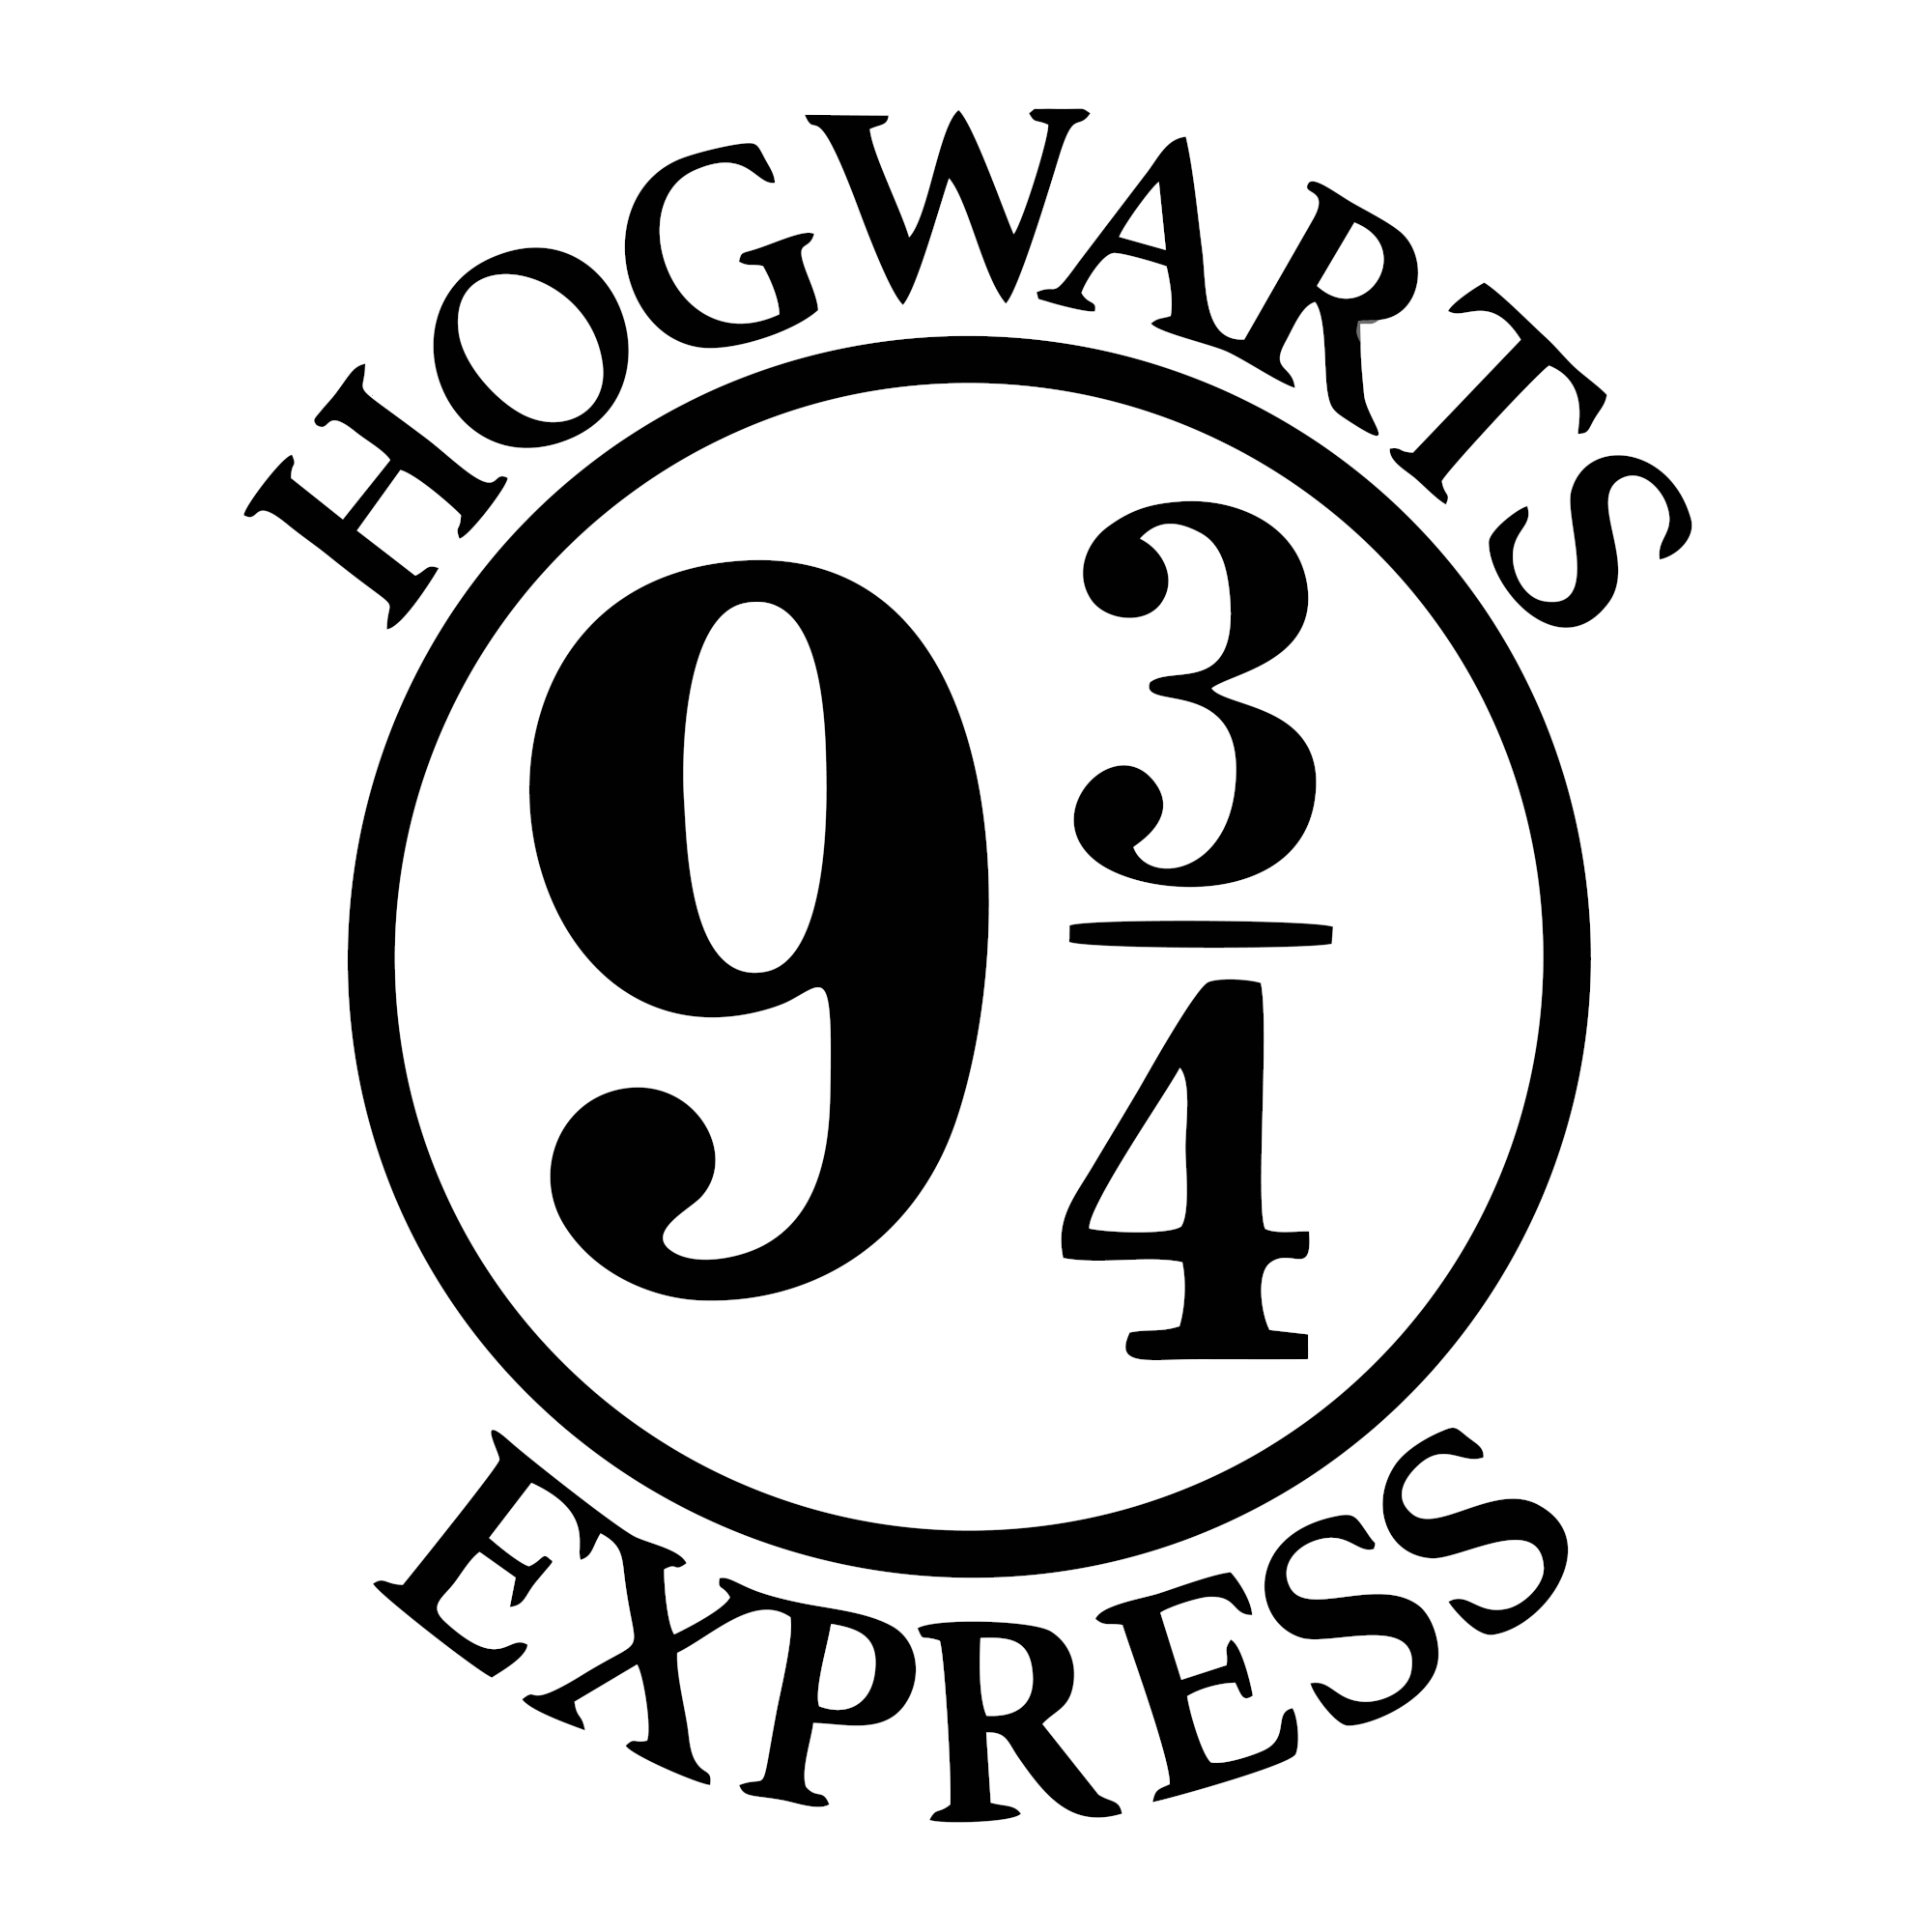 Harry Potter Hogwarts Express 934